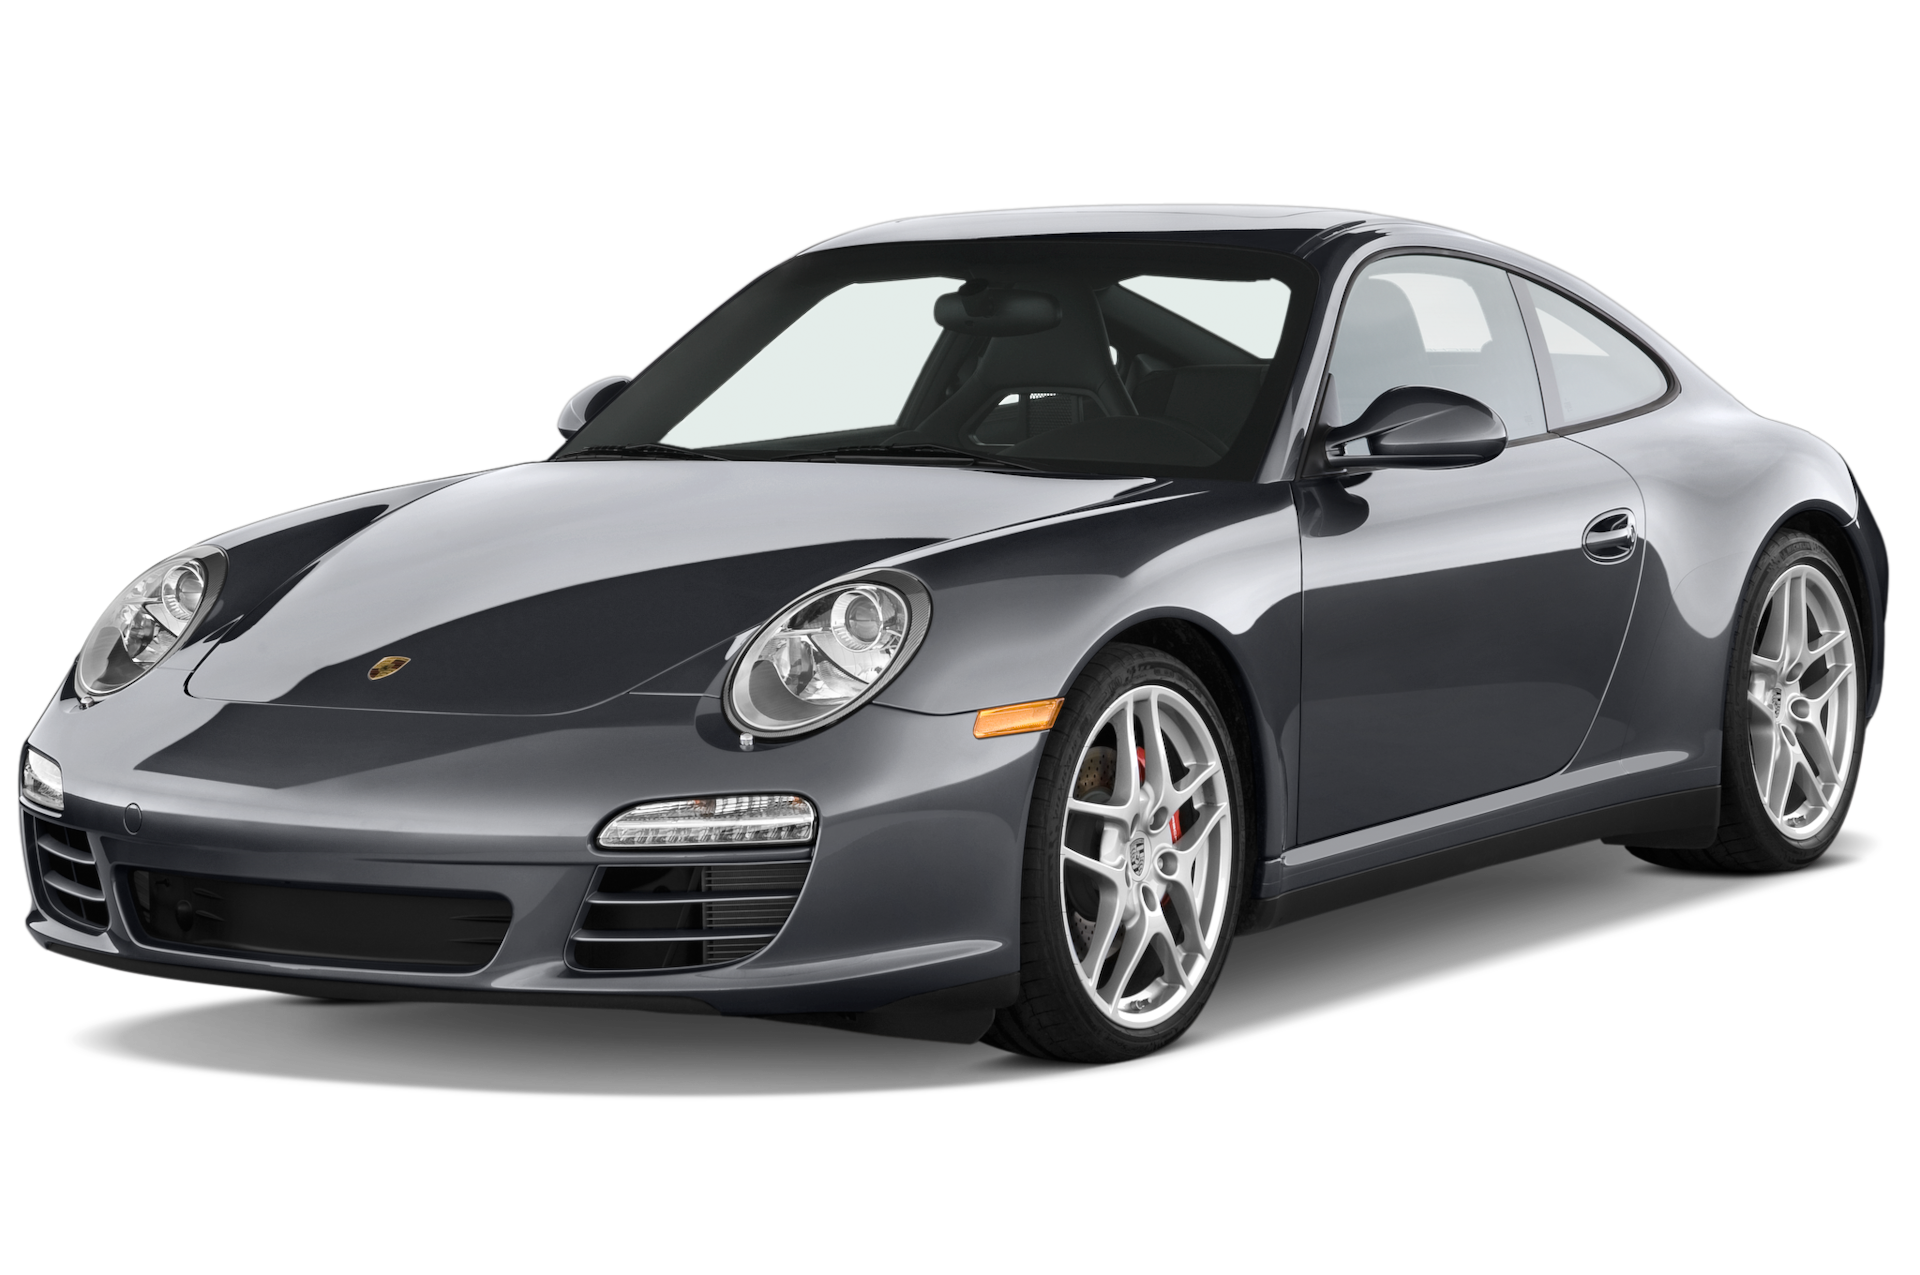 2012 Porsche 911 Prices, Reviews, and Photos - MotorTrend